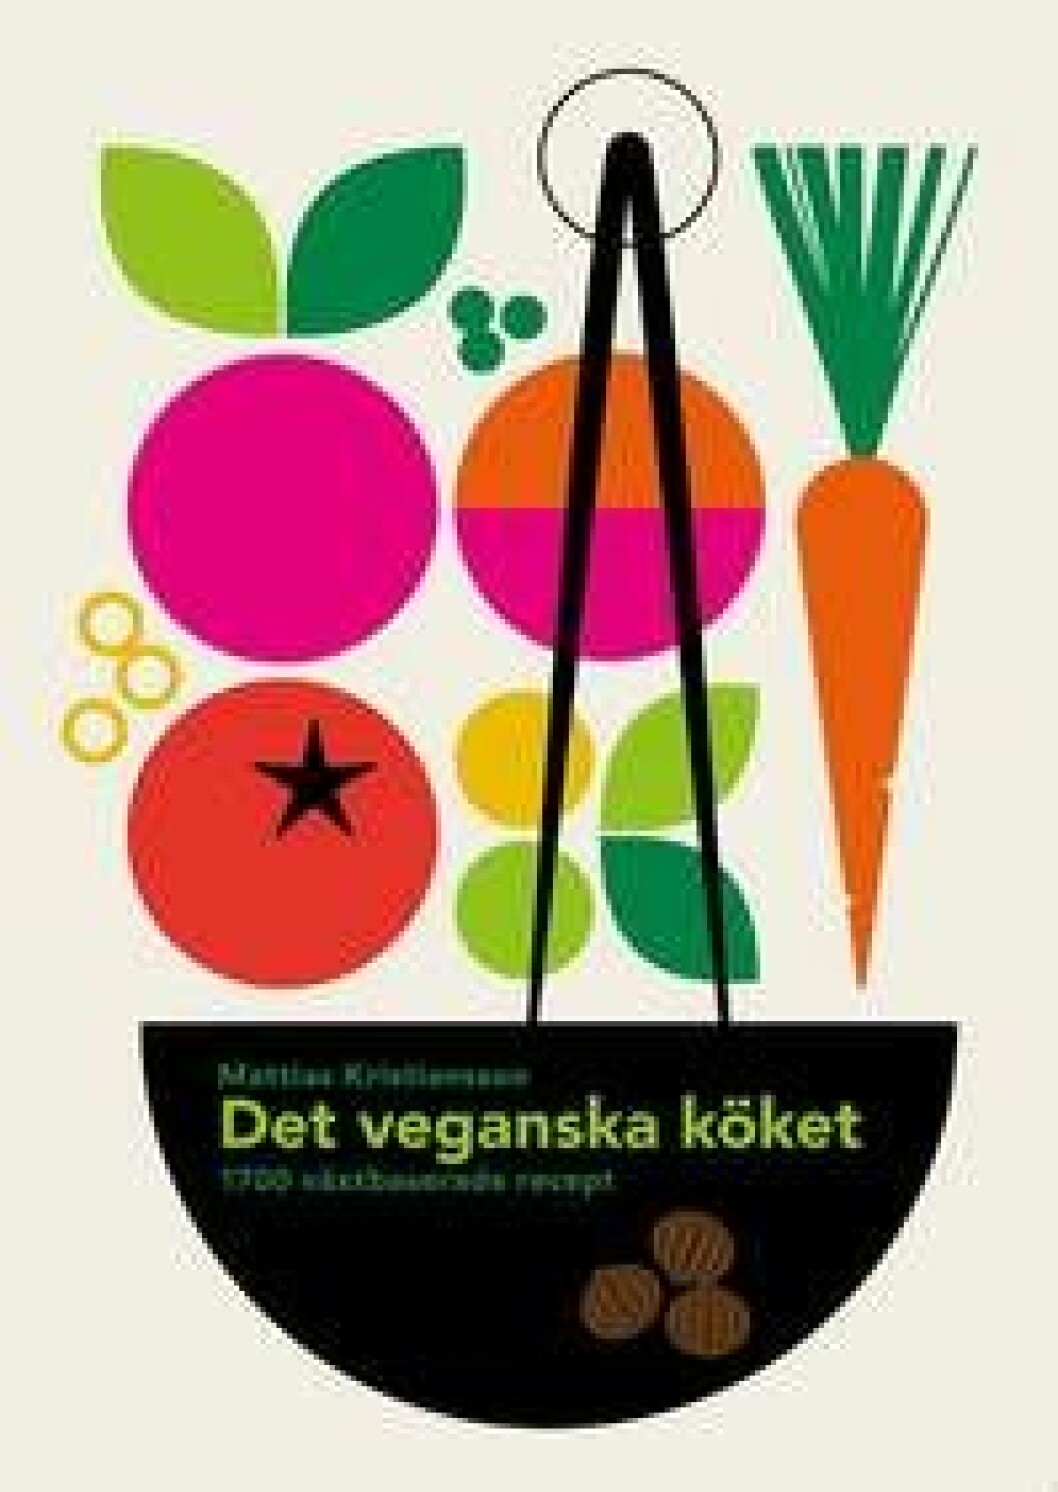 Det veganska köket – Mattias Kristiansson